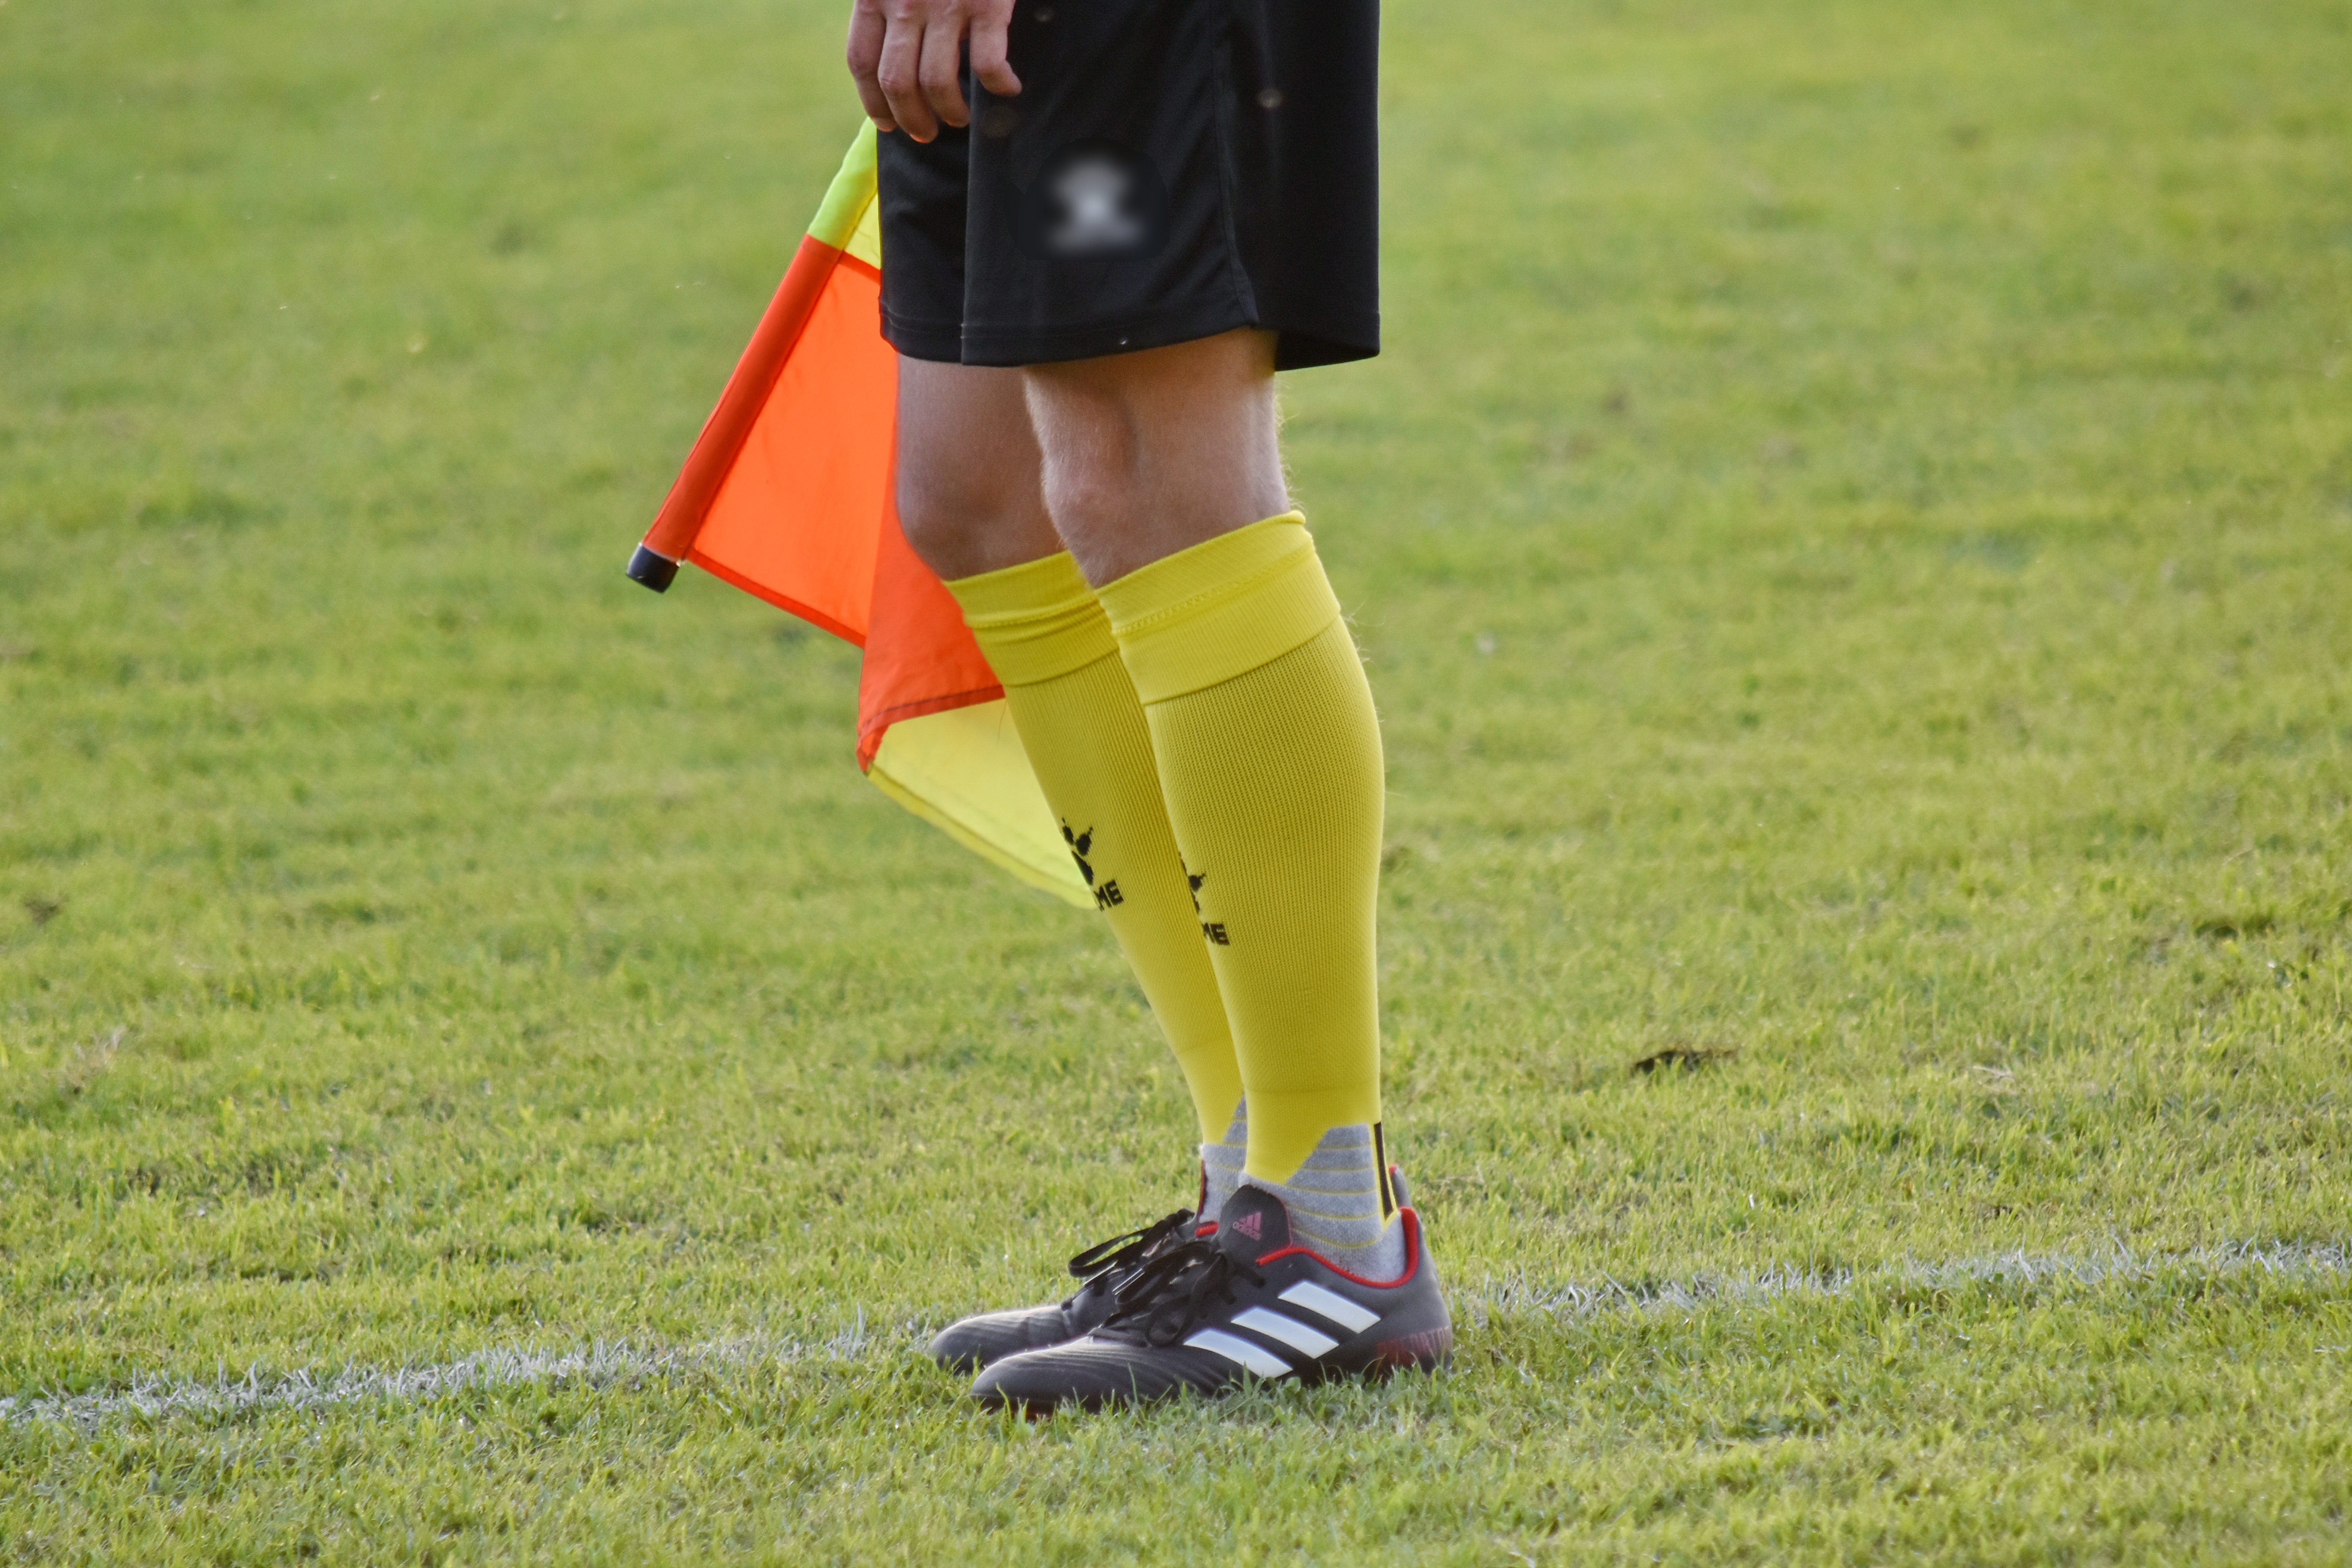 Free picture: equipment, flag, soccer, sport, uniform, foot, grass ...